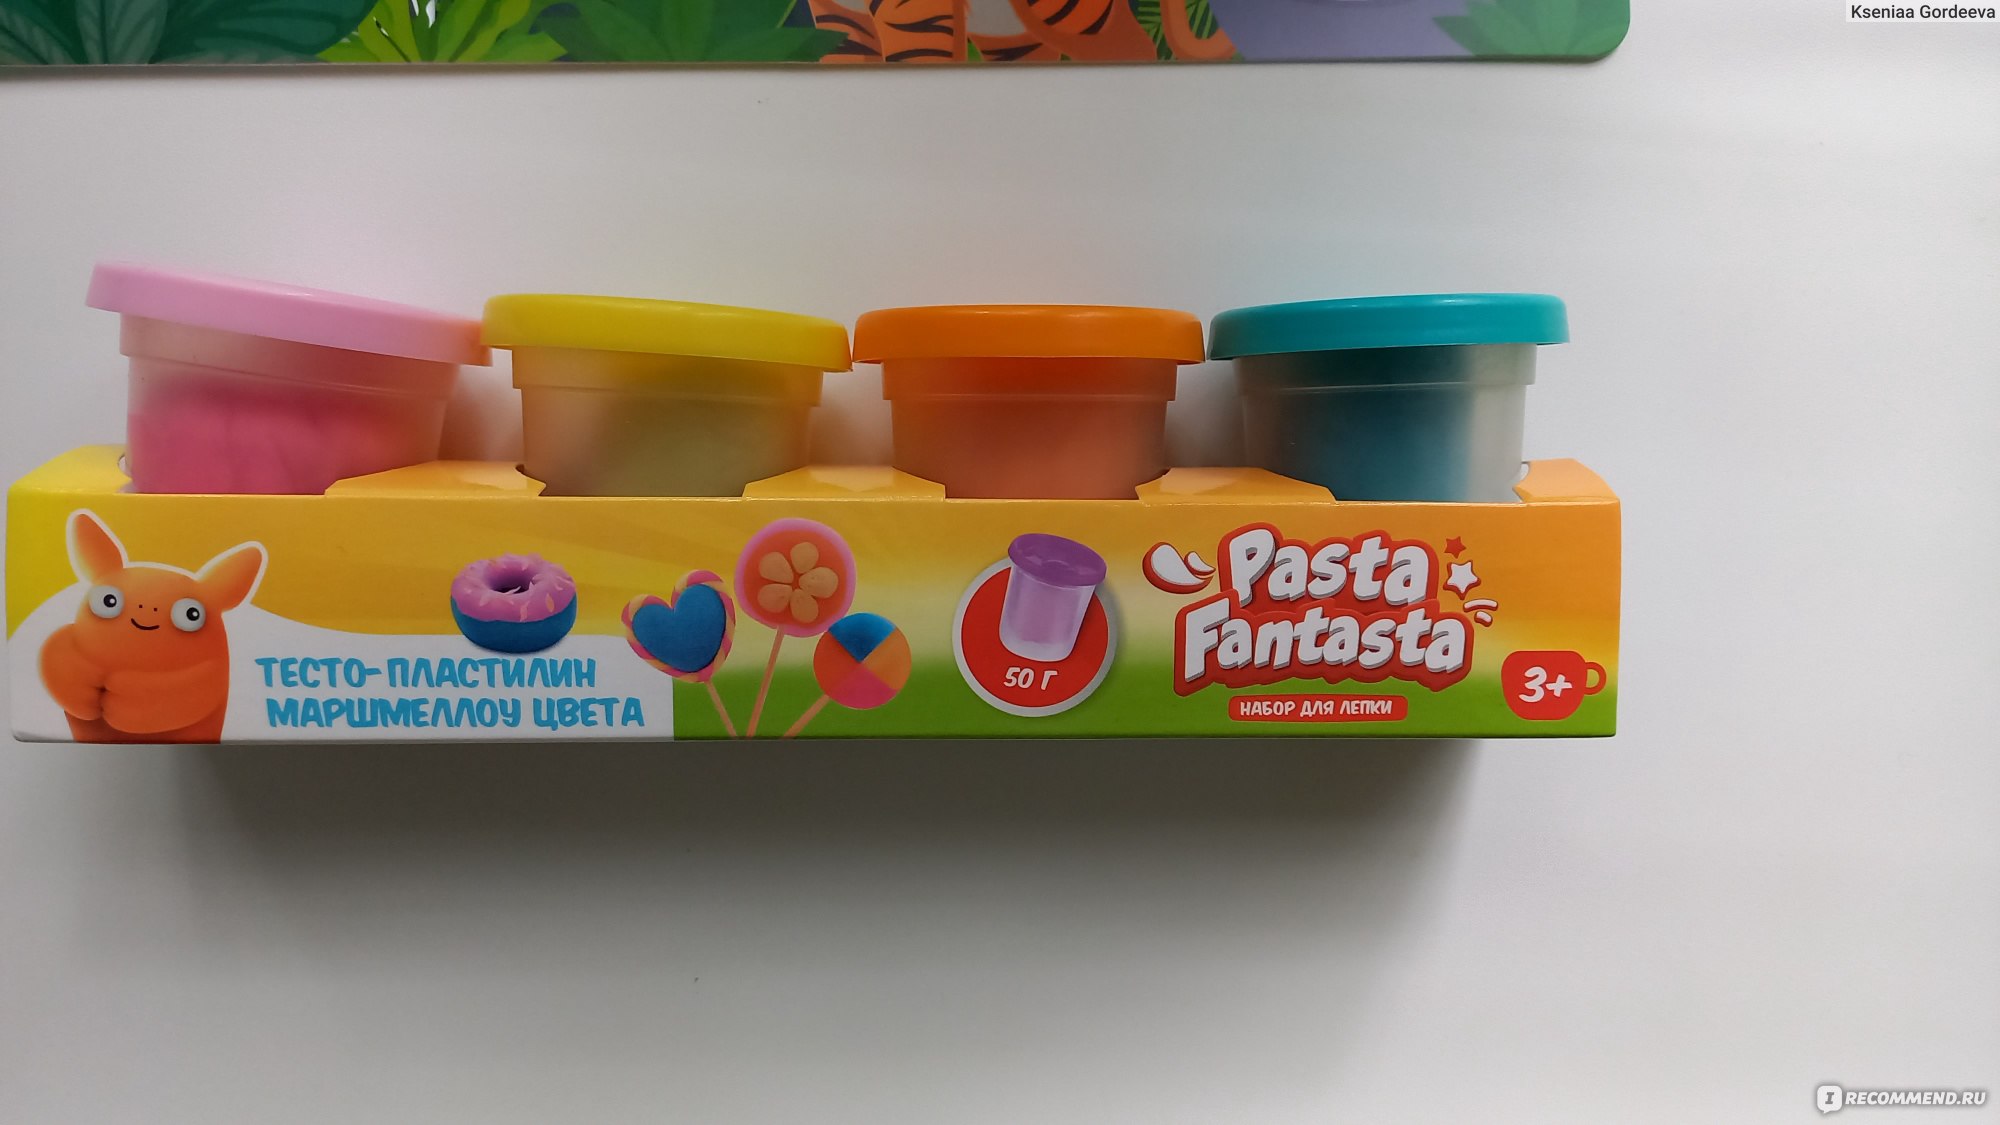 Пластилин от 1 года. Pasta fantasta набор для лепки. Тесто пластилин. Детский пластилин тесто.